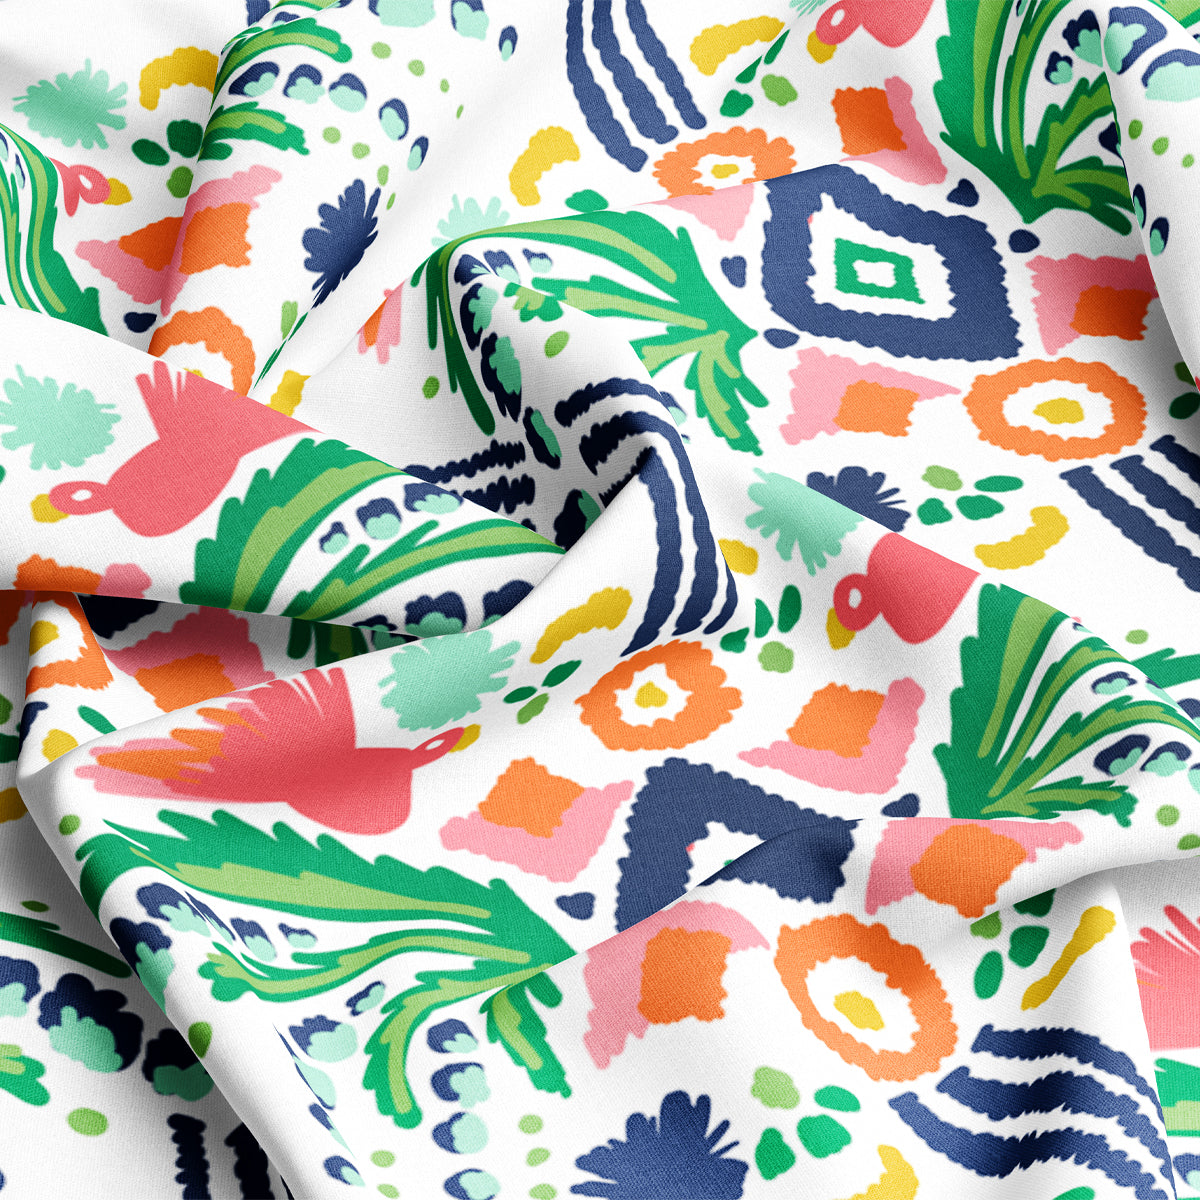 Fabric by the Yard - Jungle Ikat